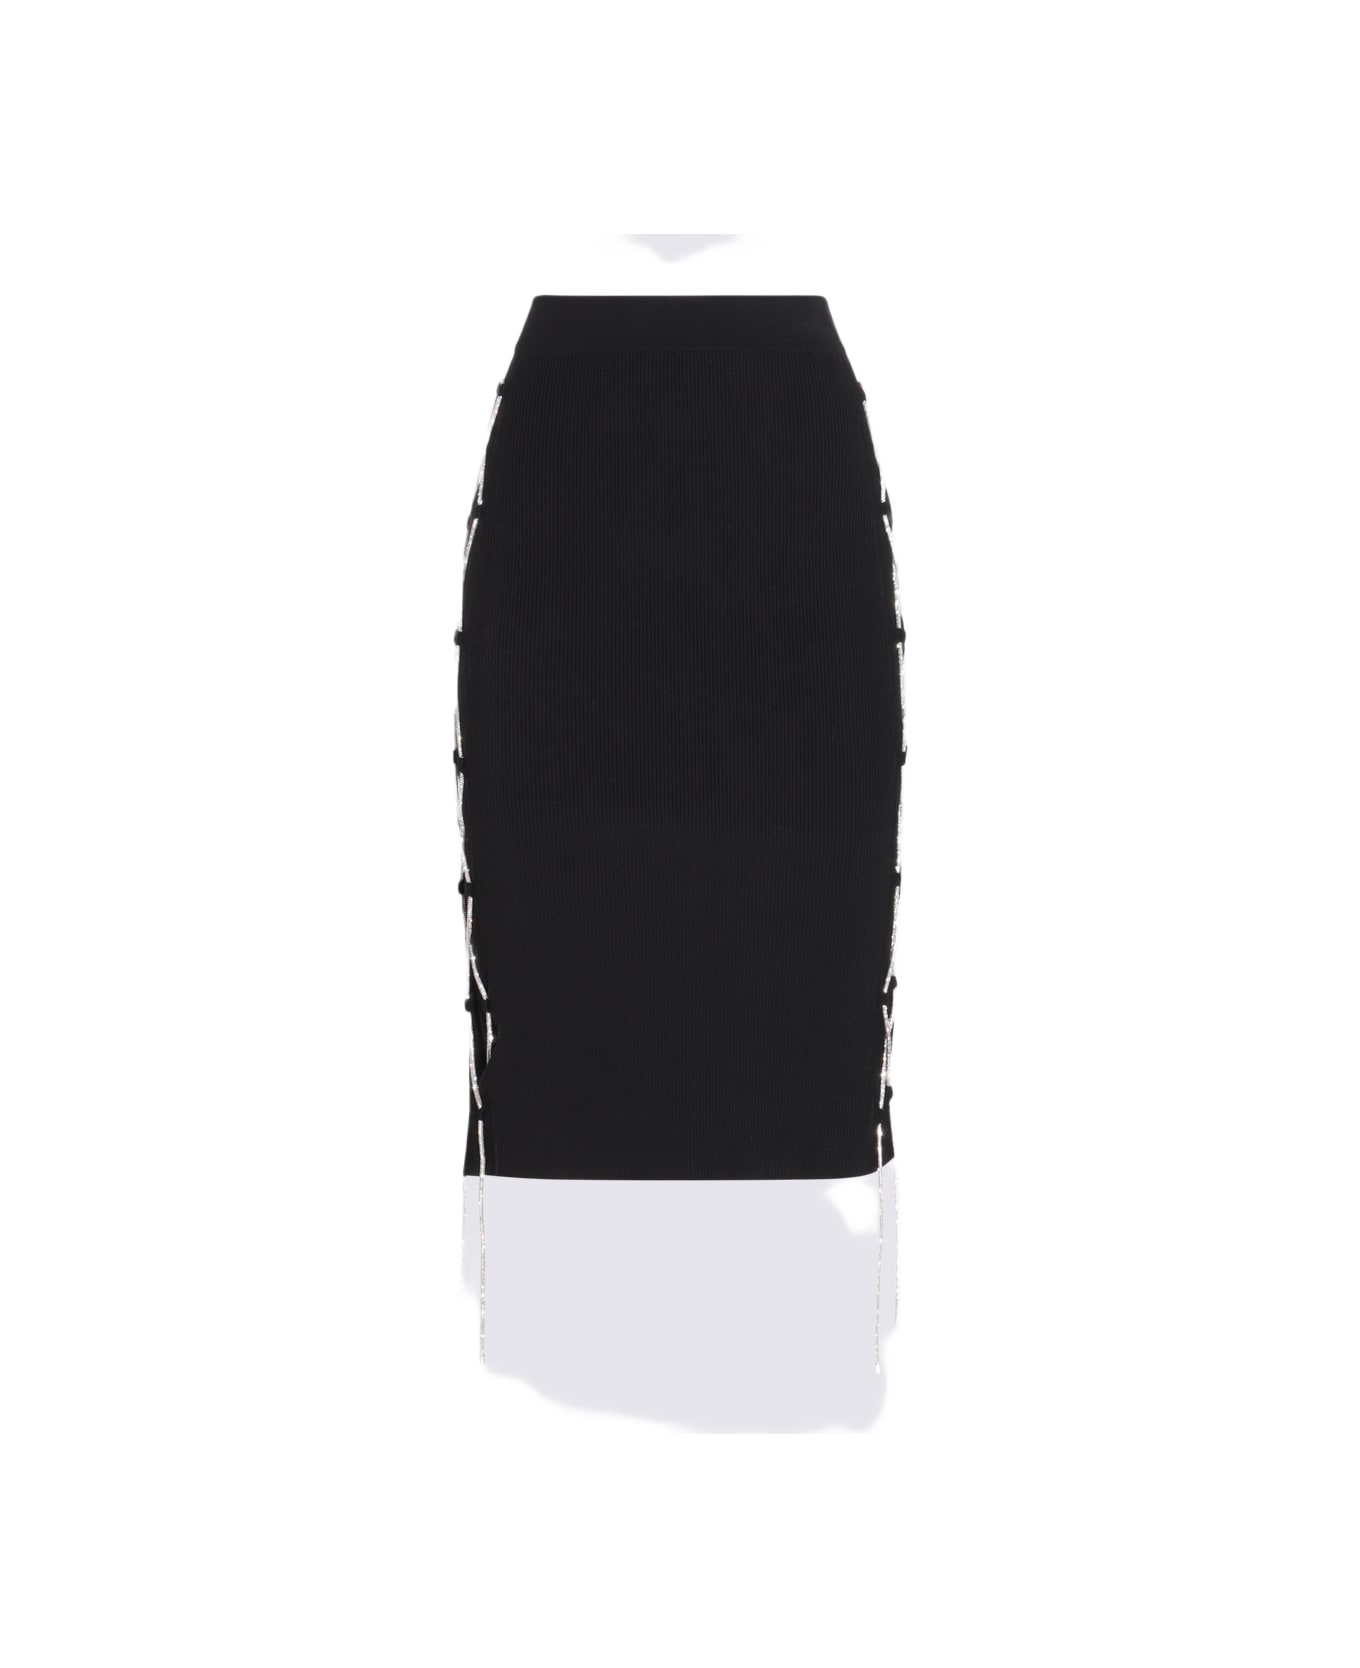 Giuseppe di Morabito Black Cotton Blend Skirt - Black